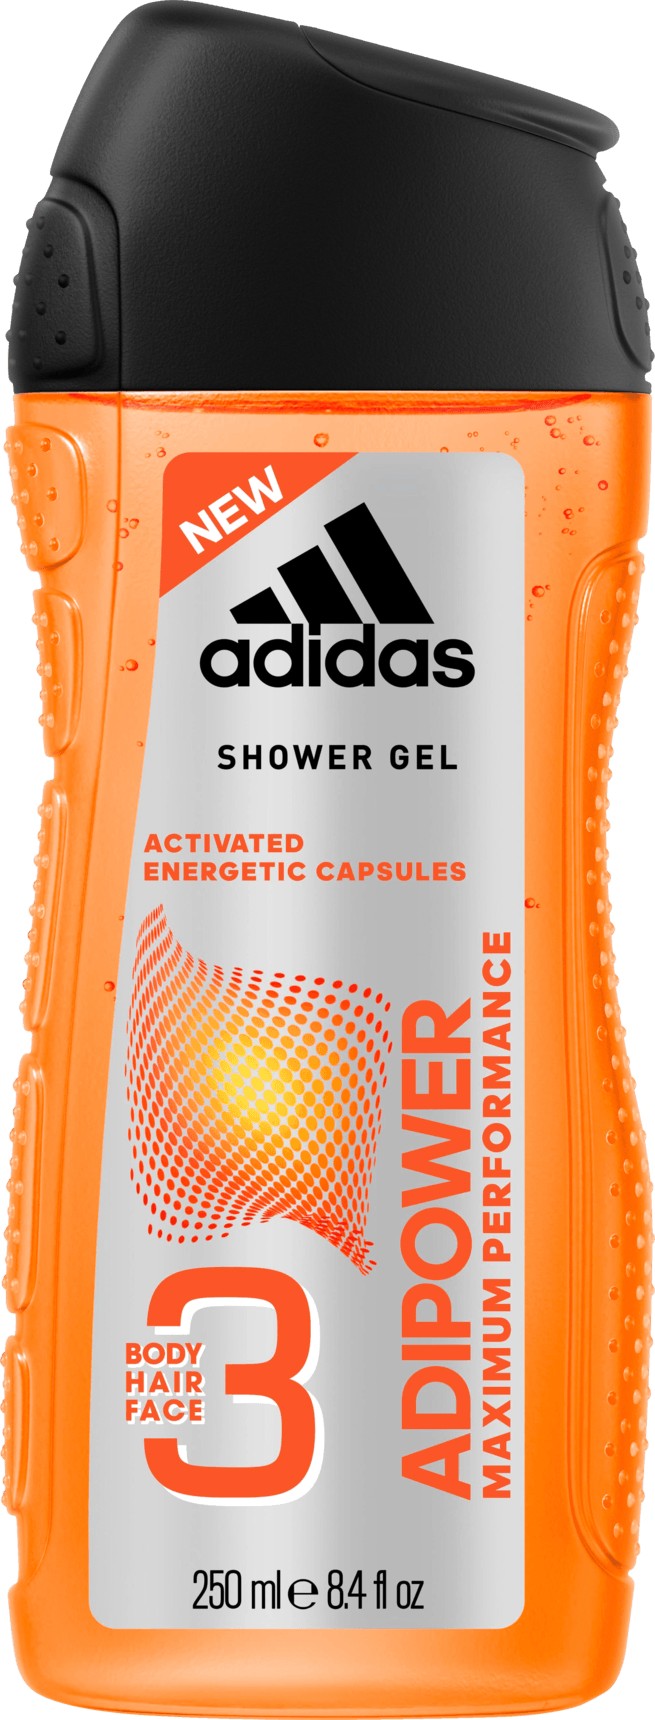 adidas adipower shower gel